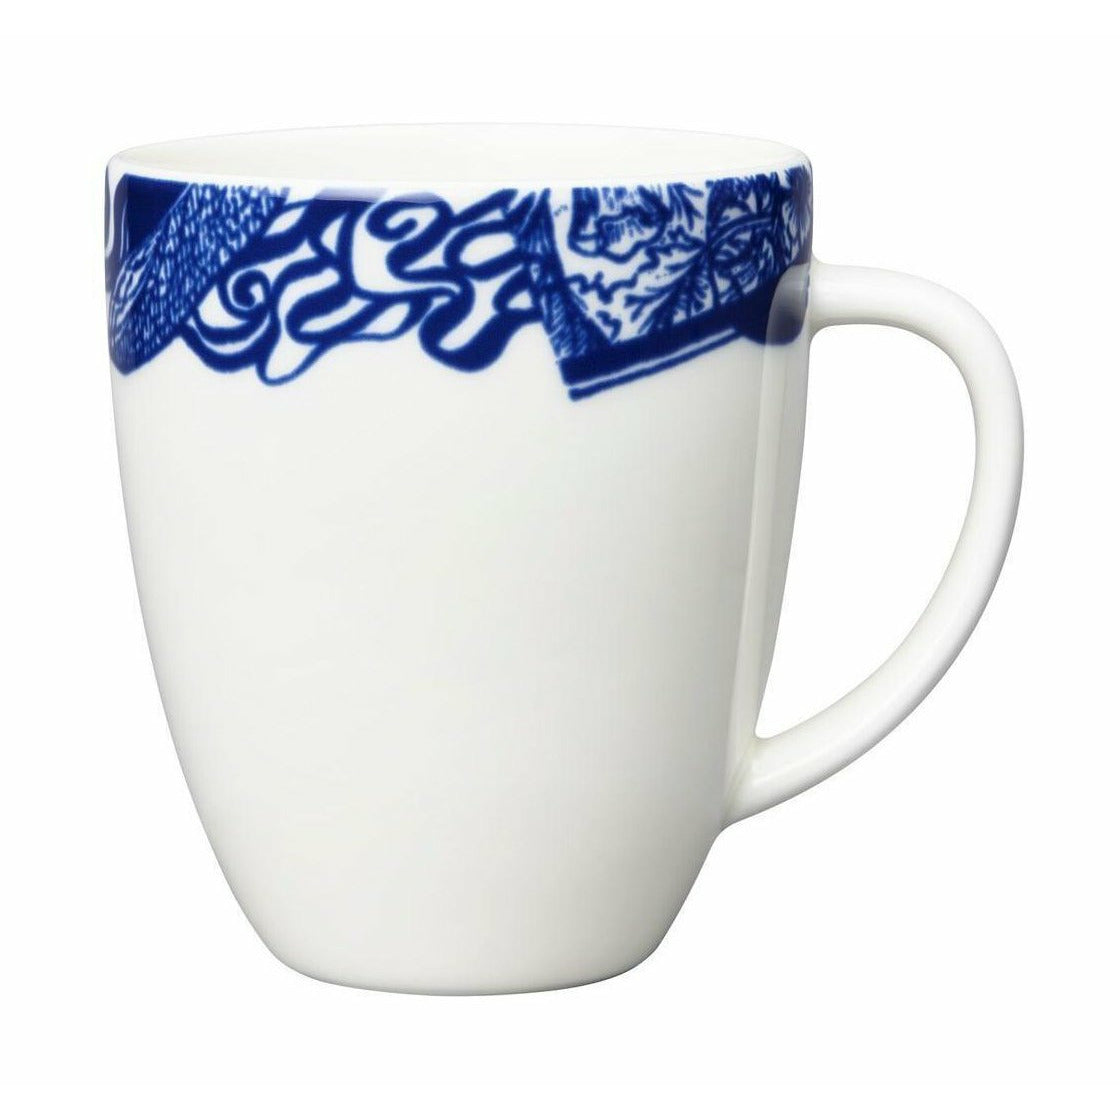 Jarrón de Arabia Pastoraali 13 cm, blanco/azul